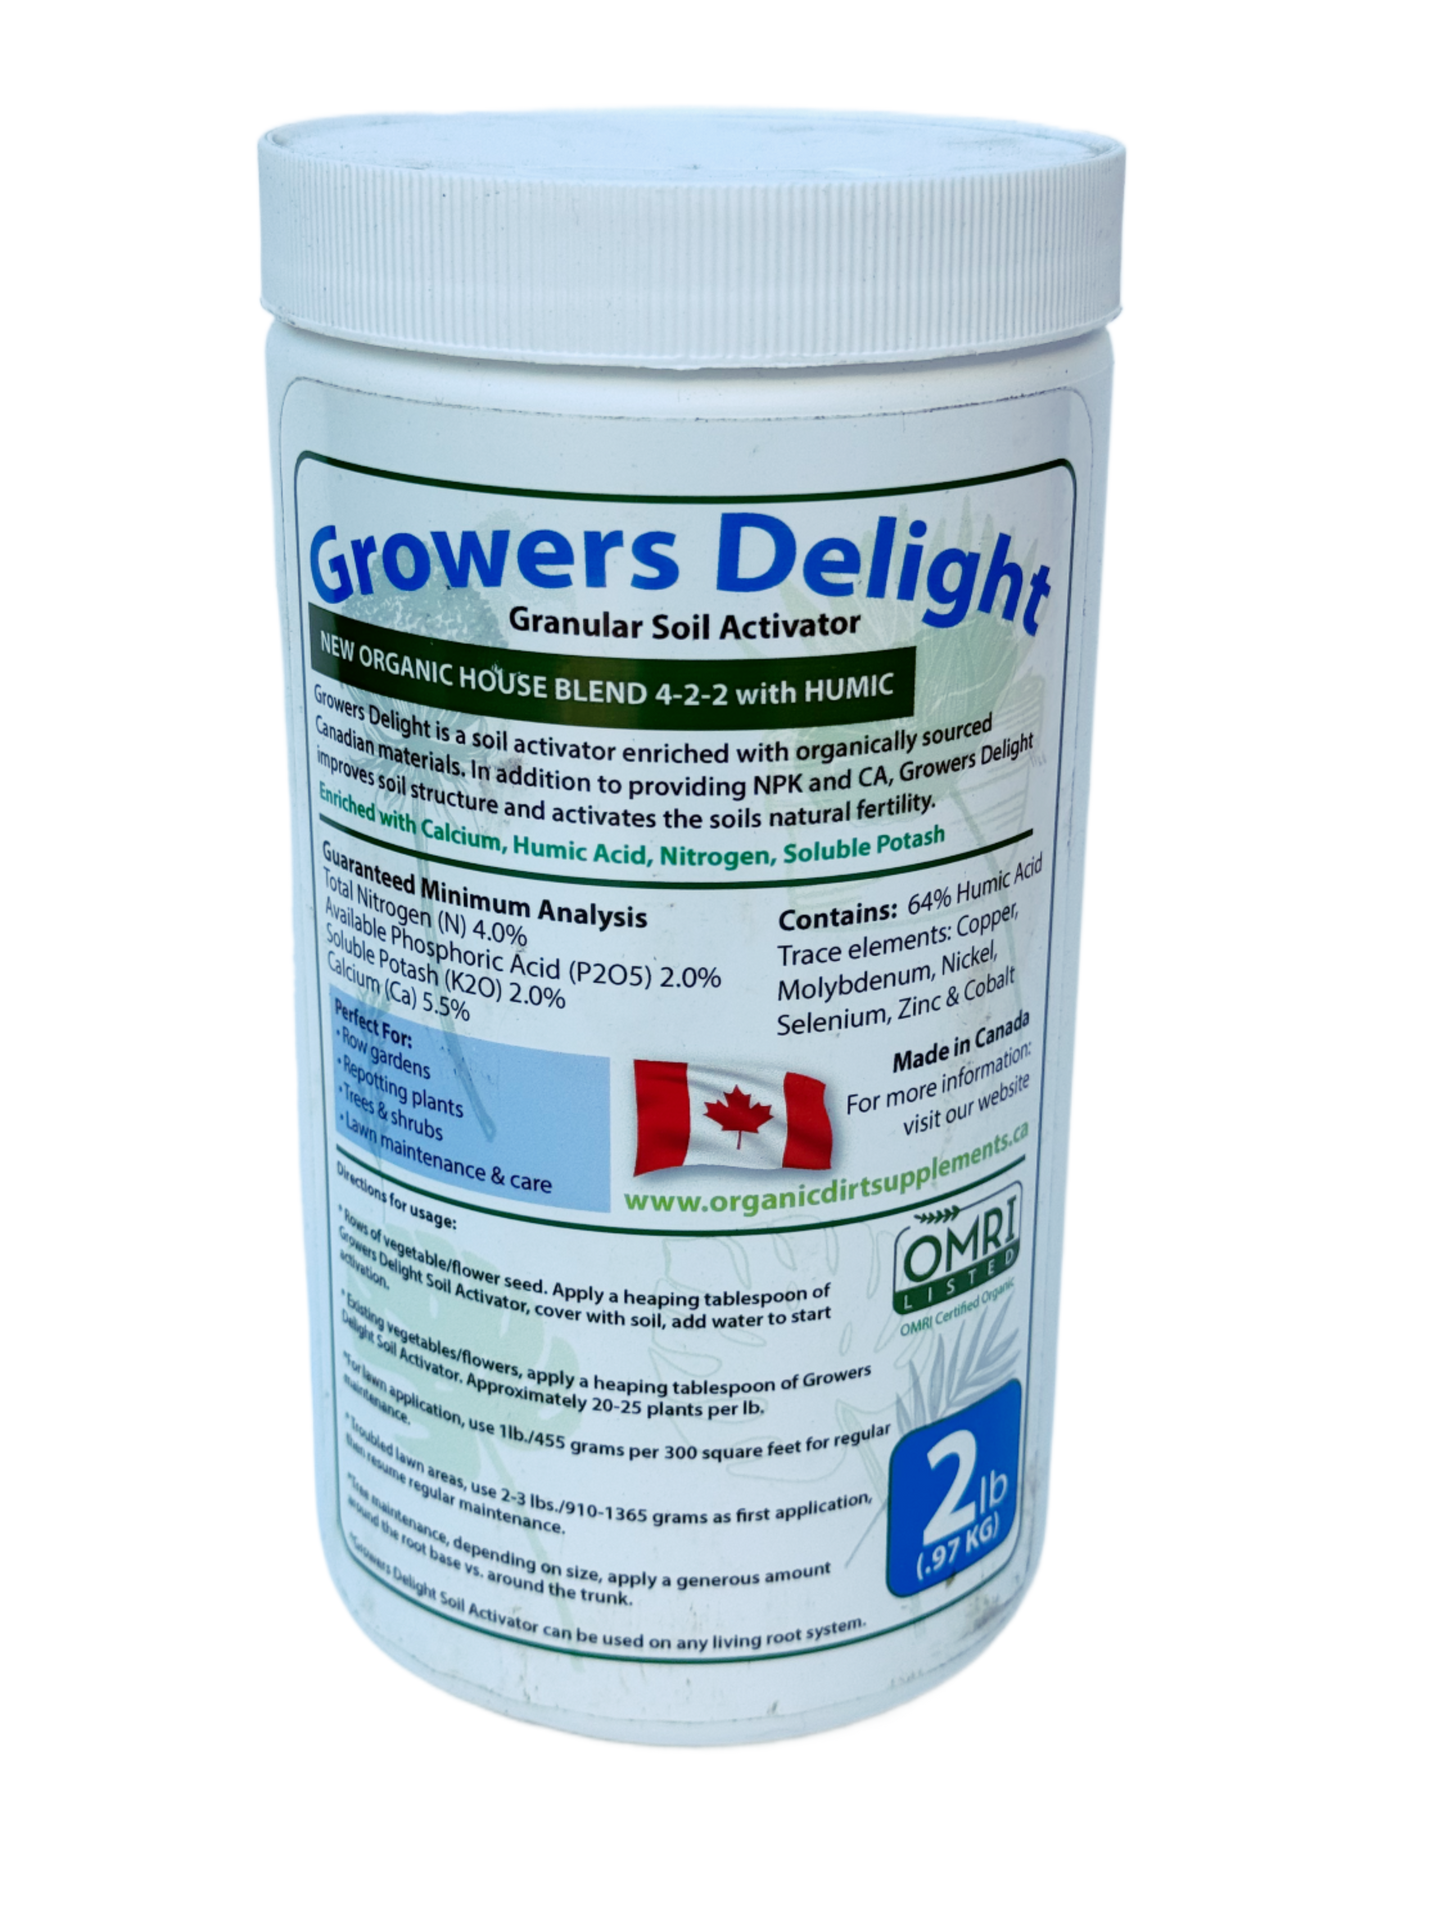 Growers Delight Granular Soil Activator 2lb